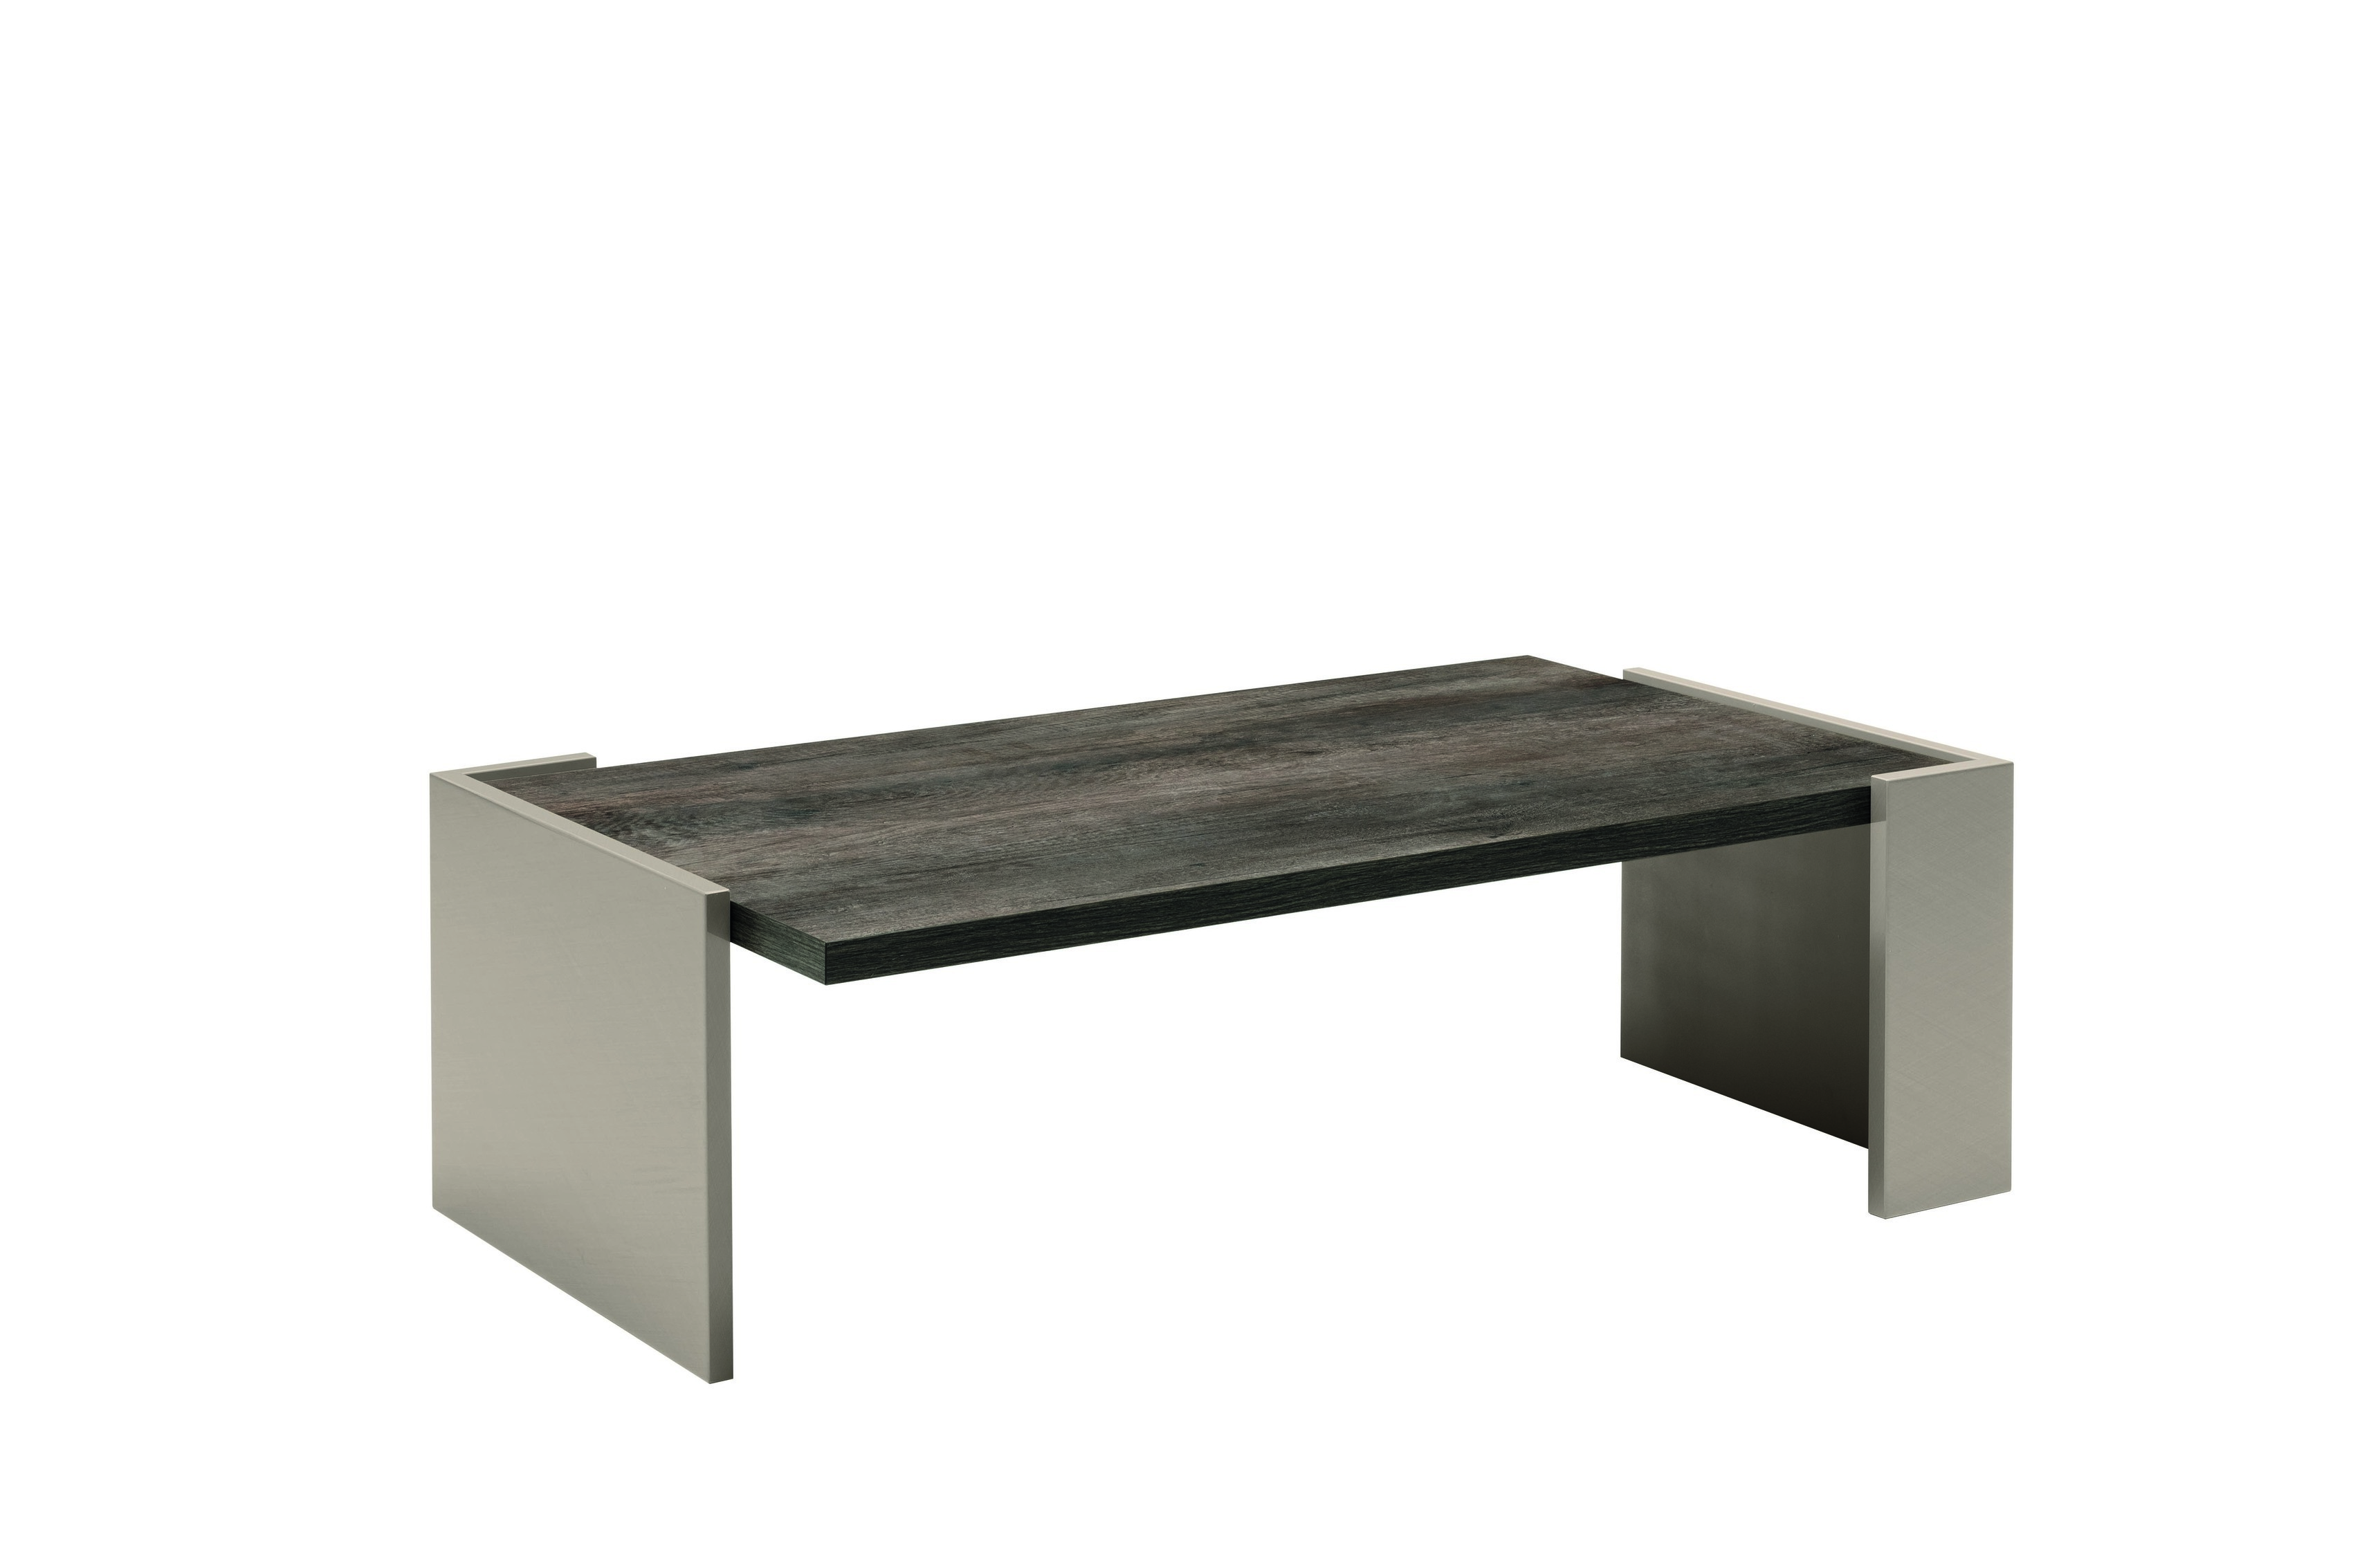 Belpasso rectangular table